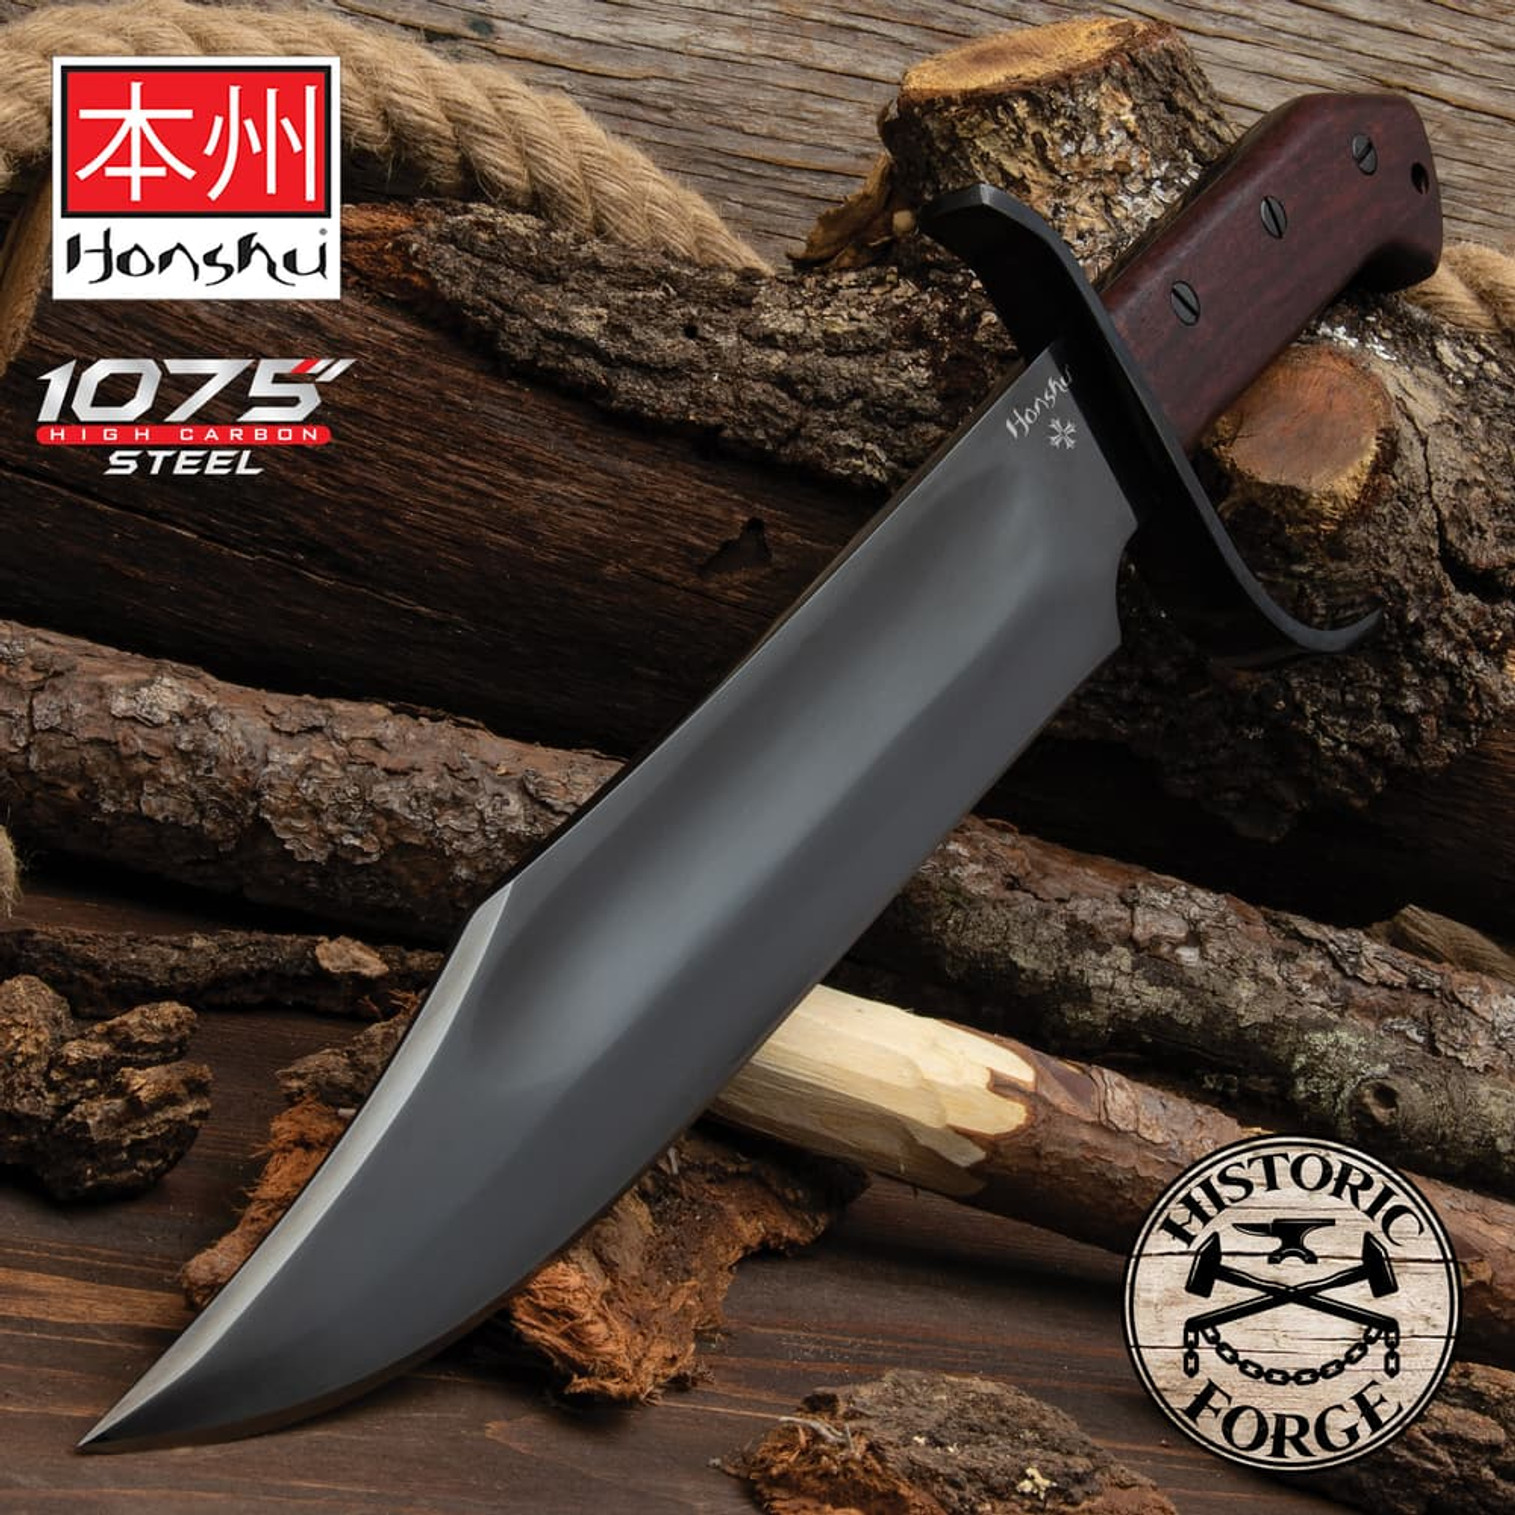 Honshu Historic Forge Pioneer Bowie Knife 